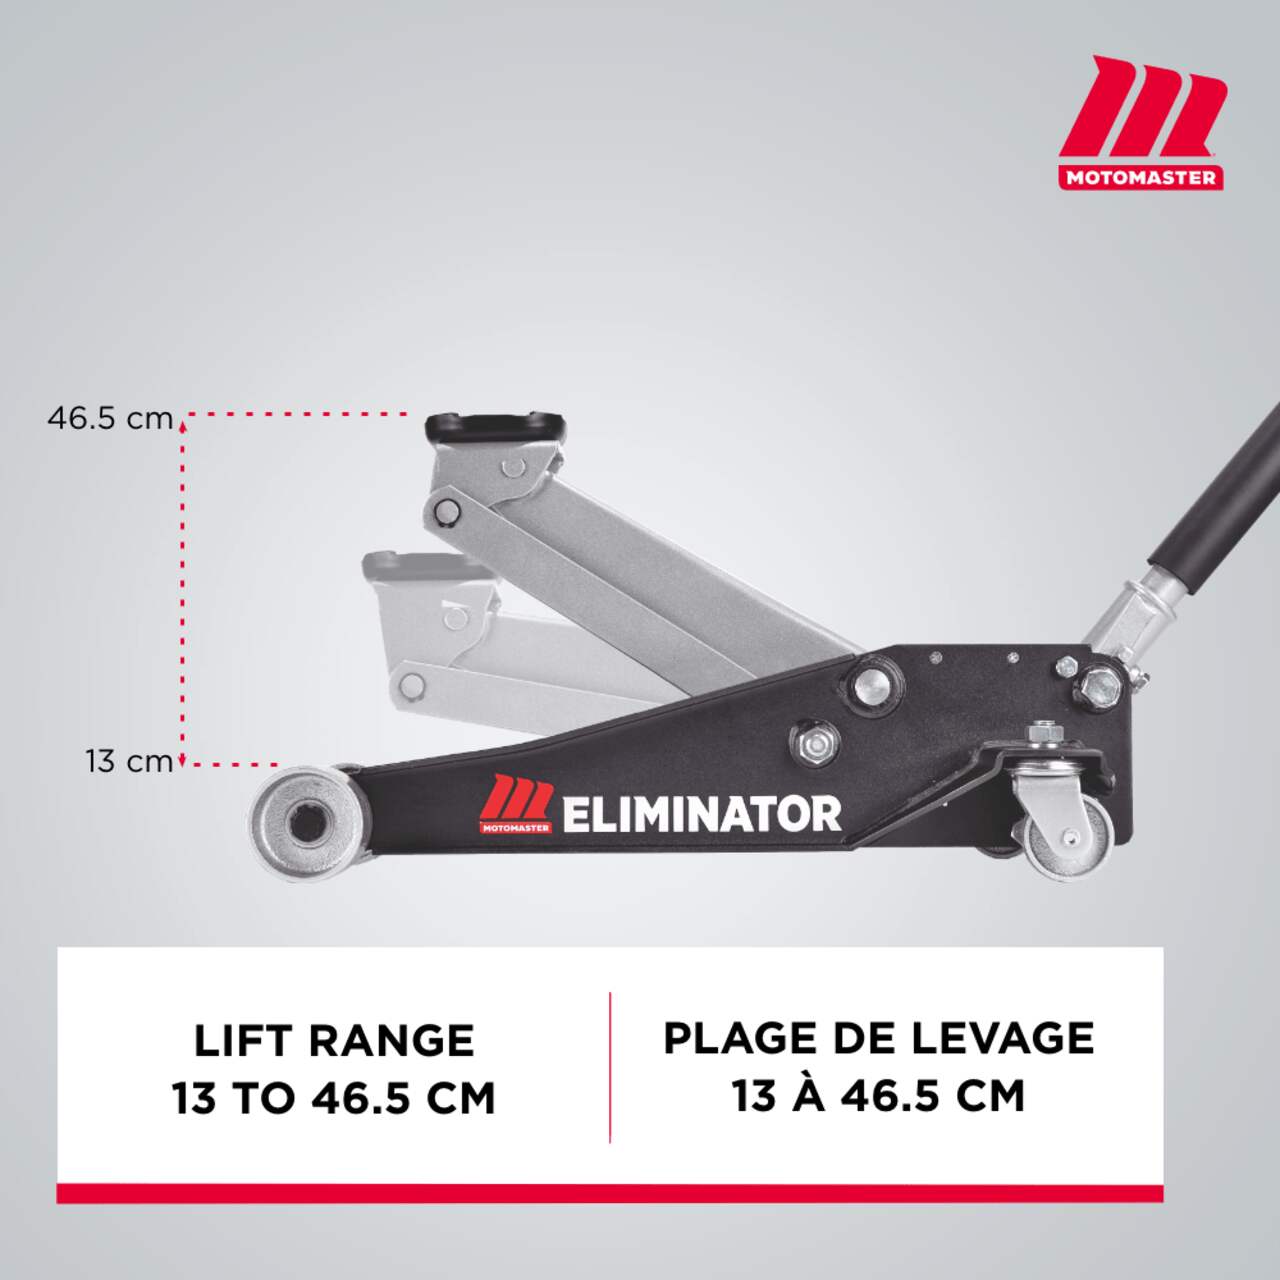 MotoMaster Eliminator Heavy-Duty Garage Jack, 3-Ton